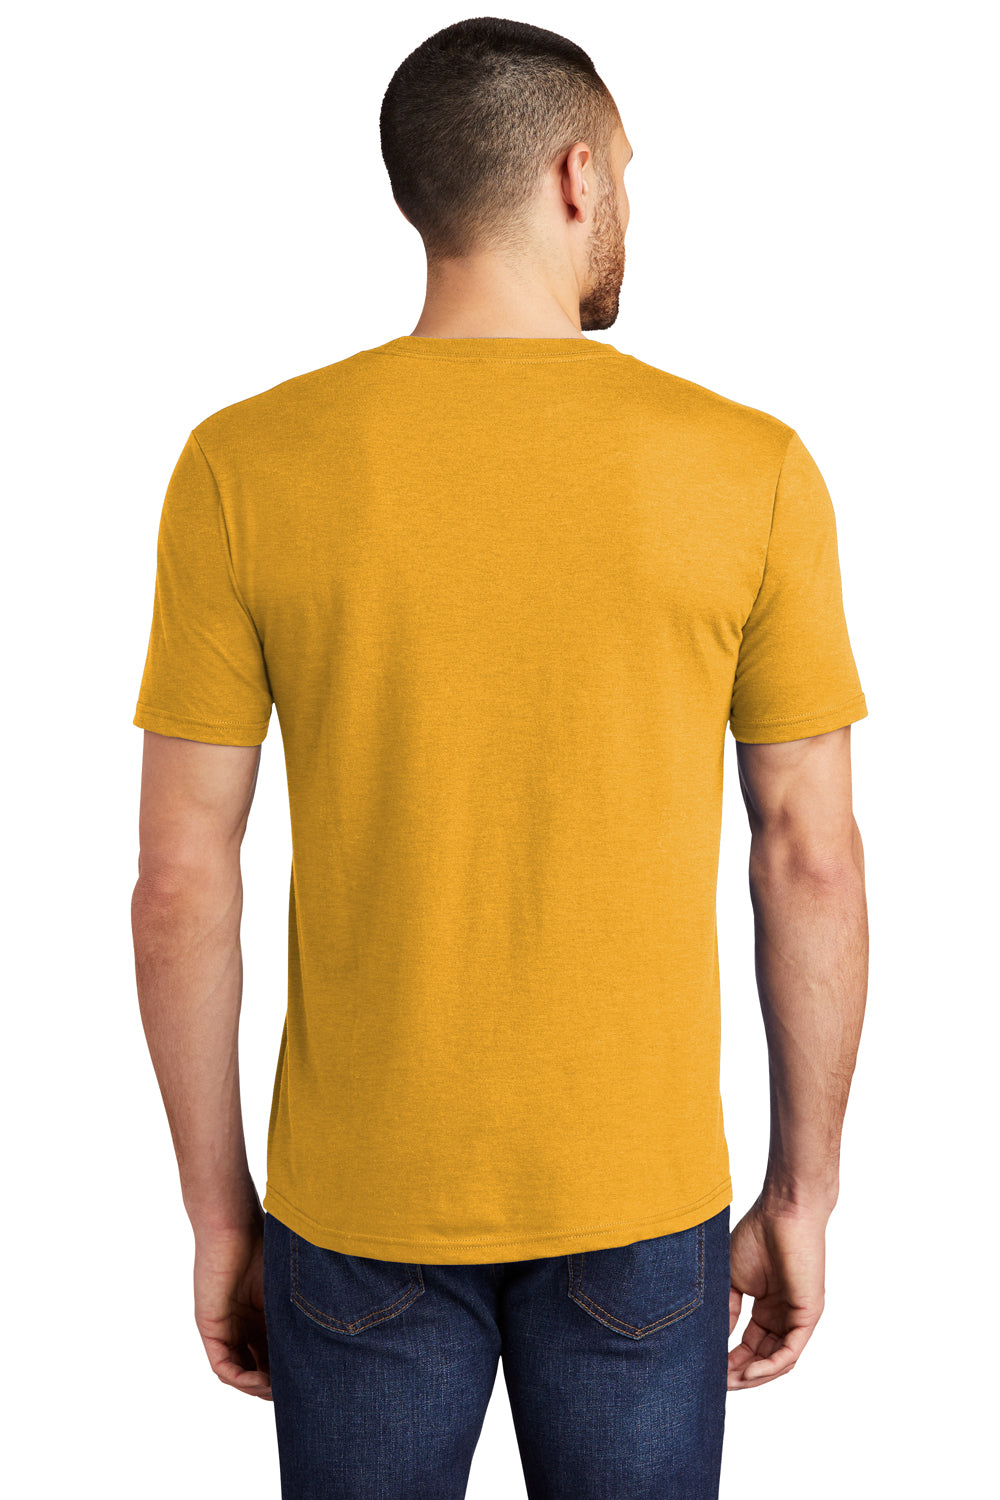 District DM130 Mens Perfect Tri Short Sleeve Crewneck T-Shirt Heather Ochre Yellow Back